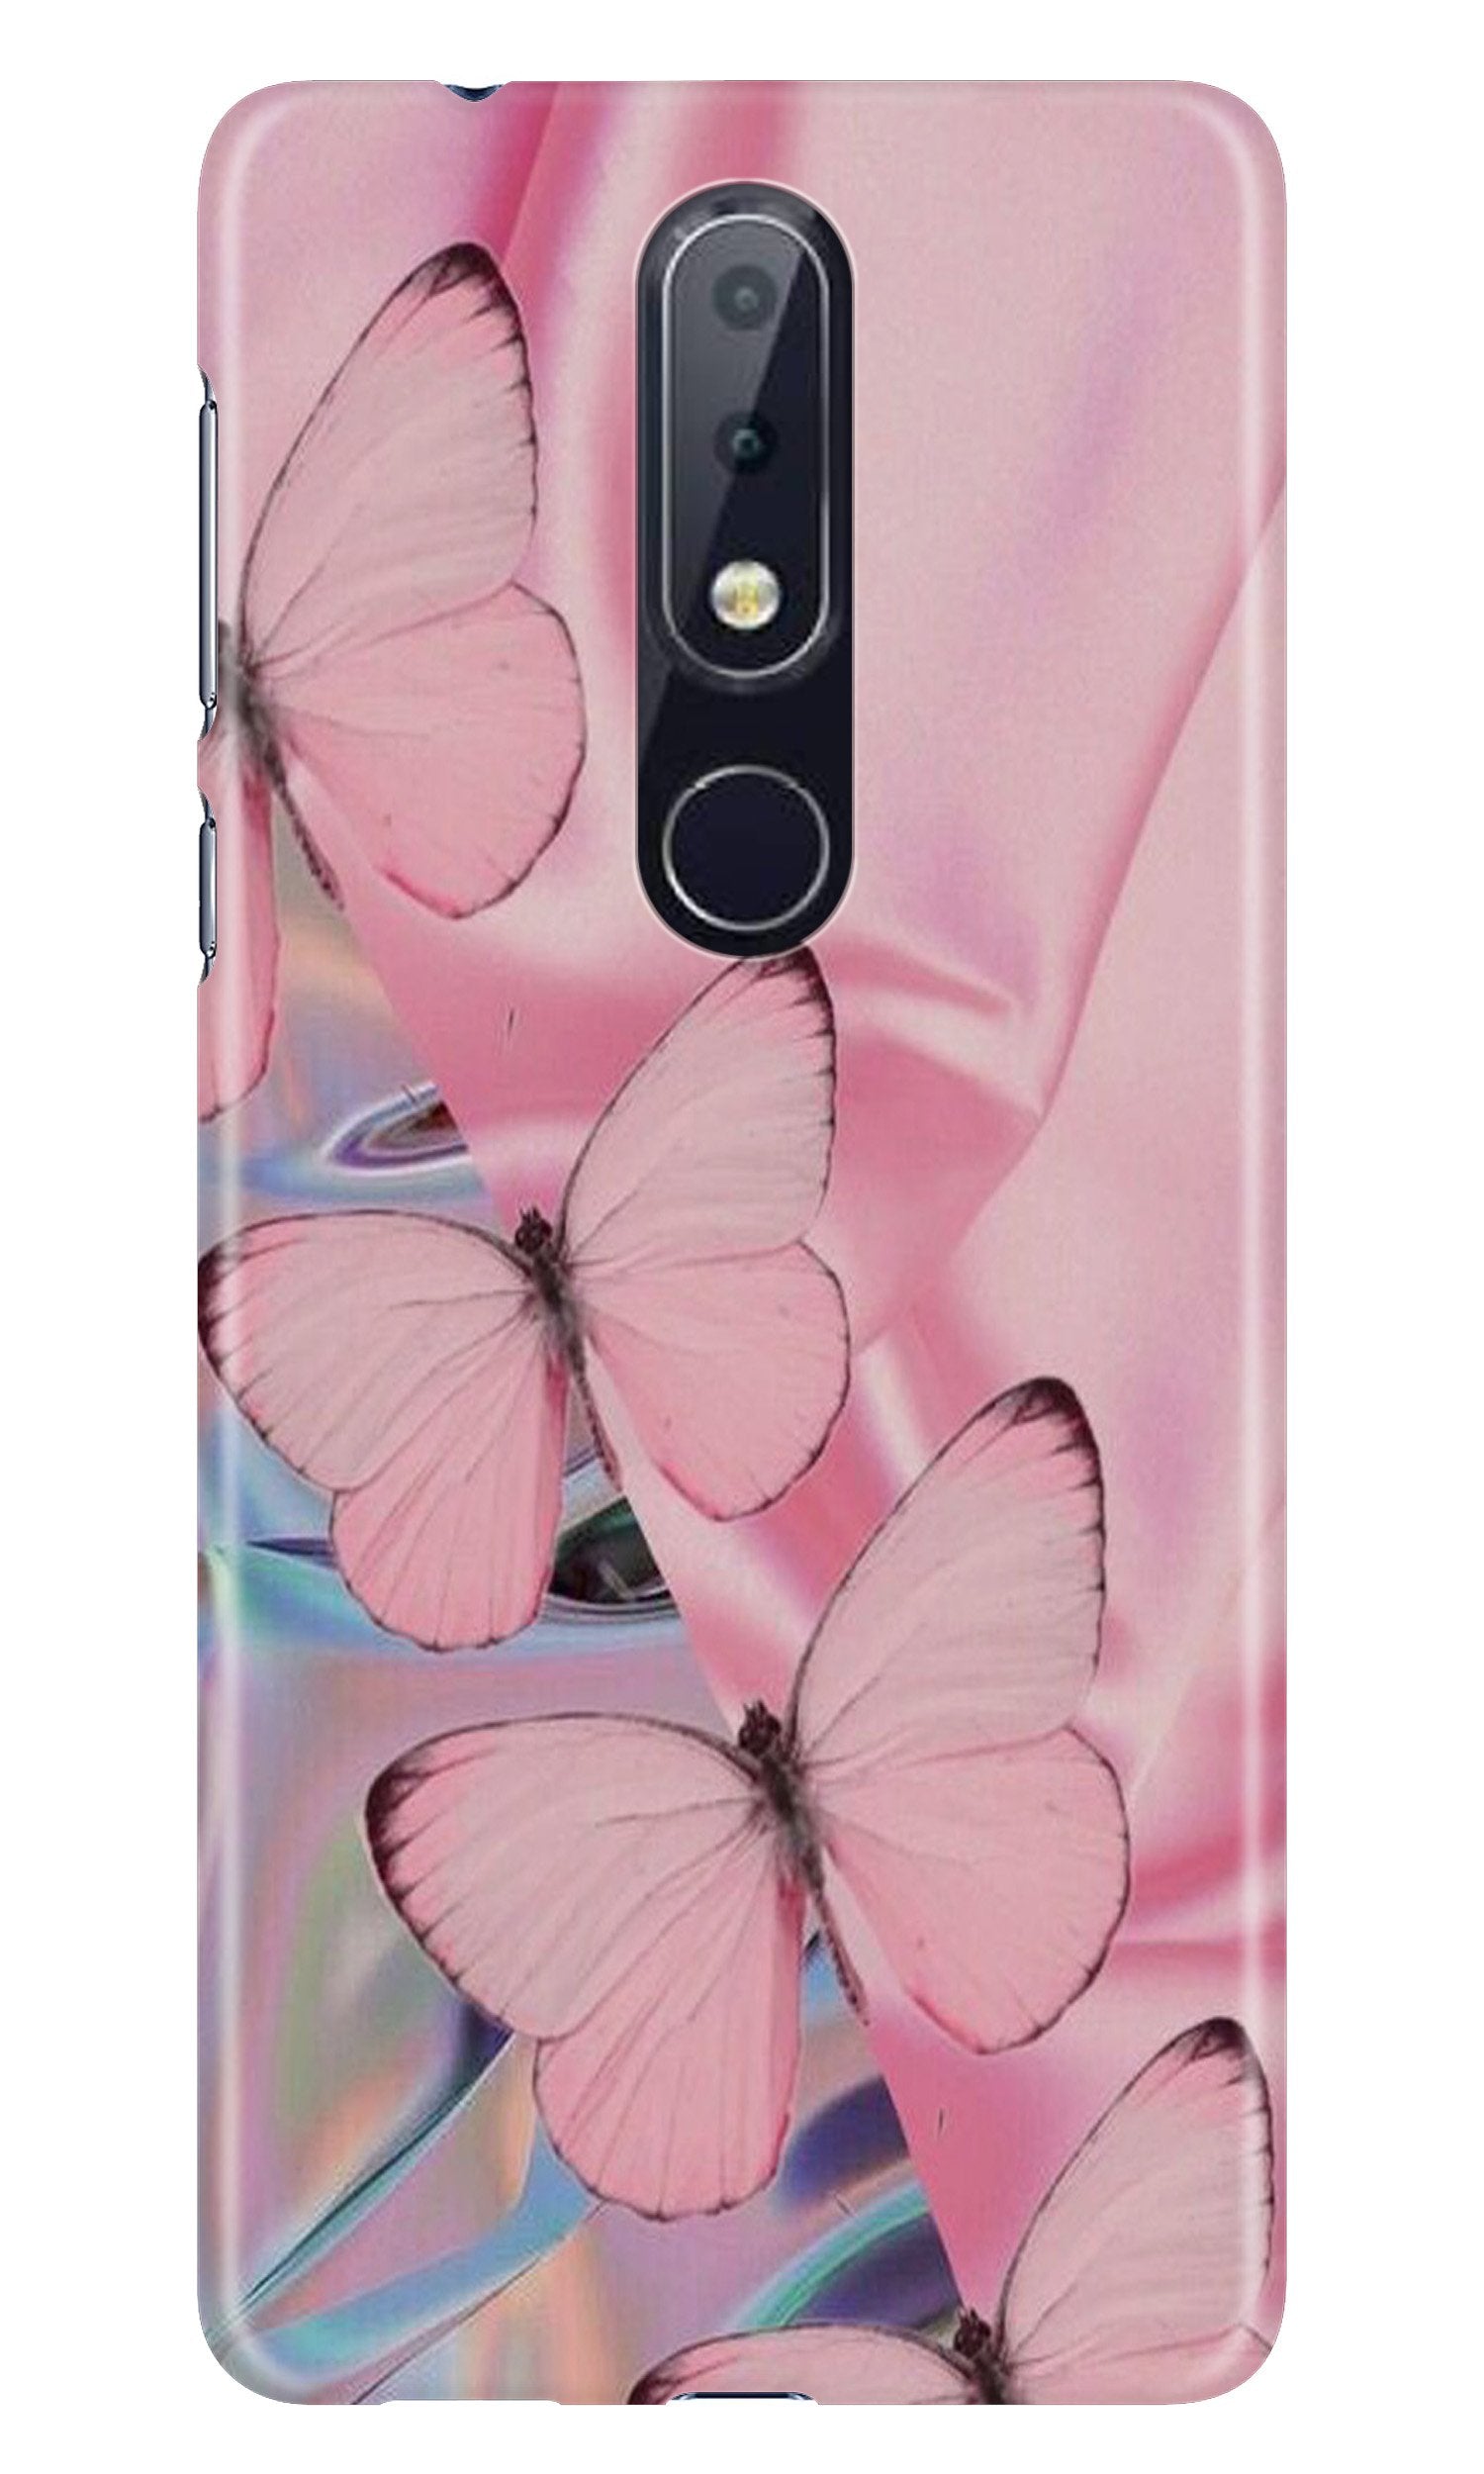 Butterflies Case for Nokia 3.2